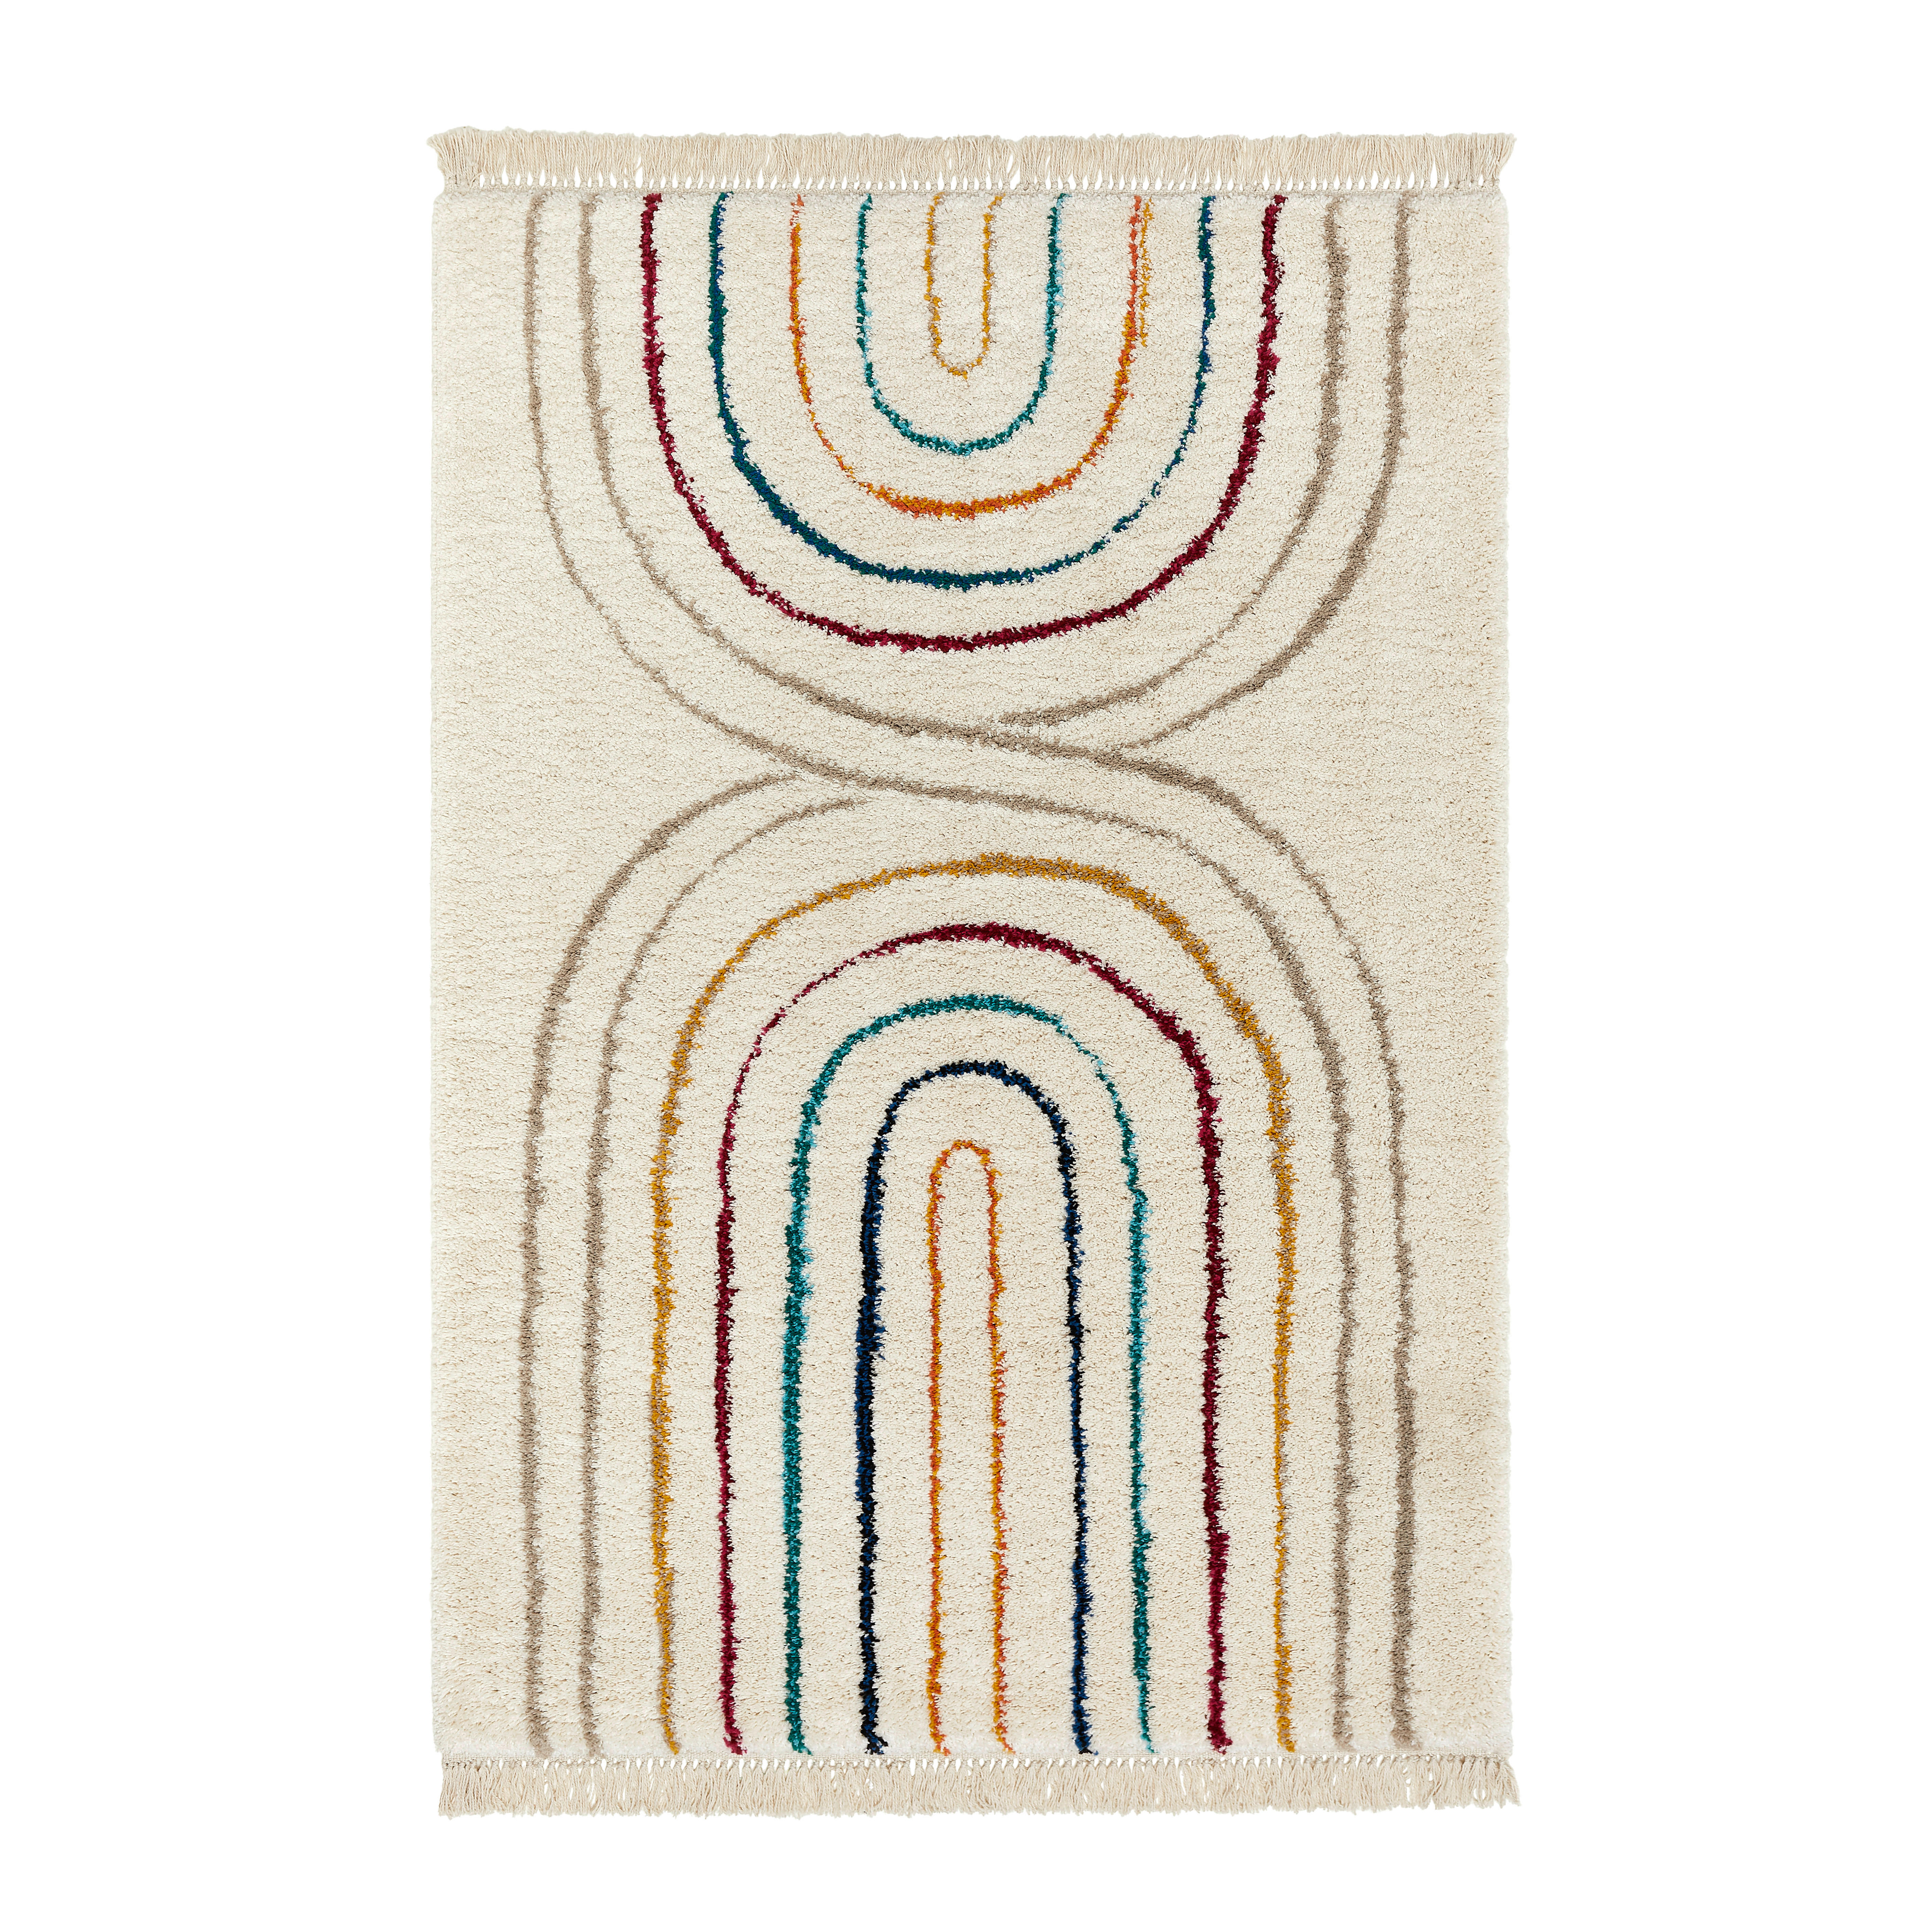 WEBTEPPICH 120/170 cm  - Beige/Multicolor, Design, Textil (120/170cm) - Novel